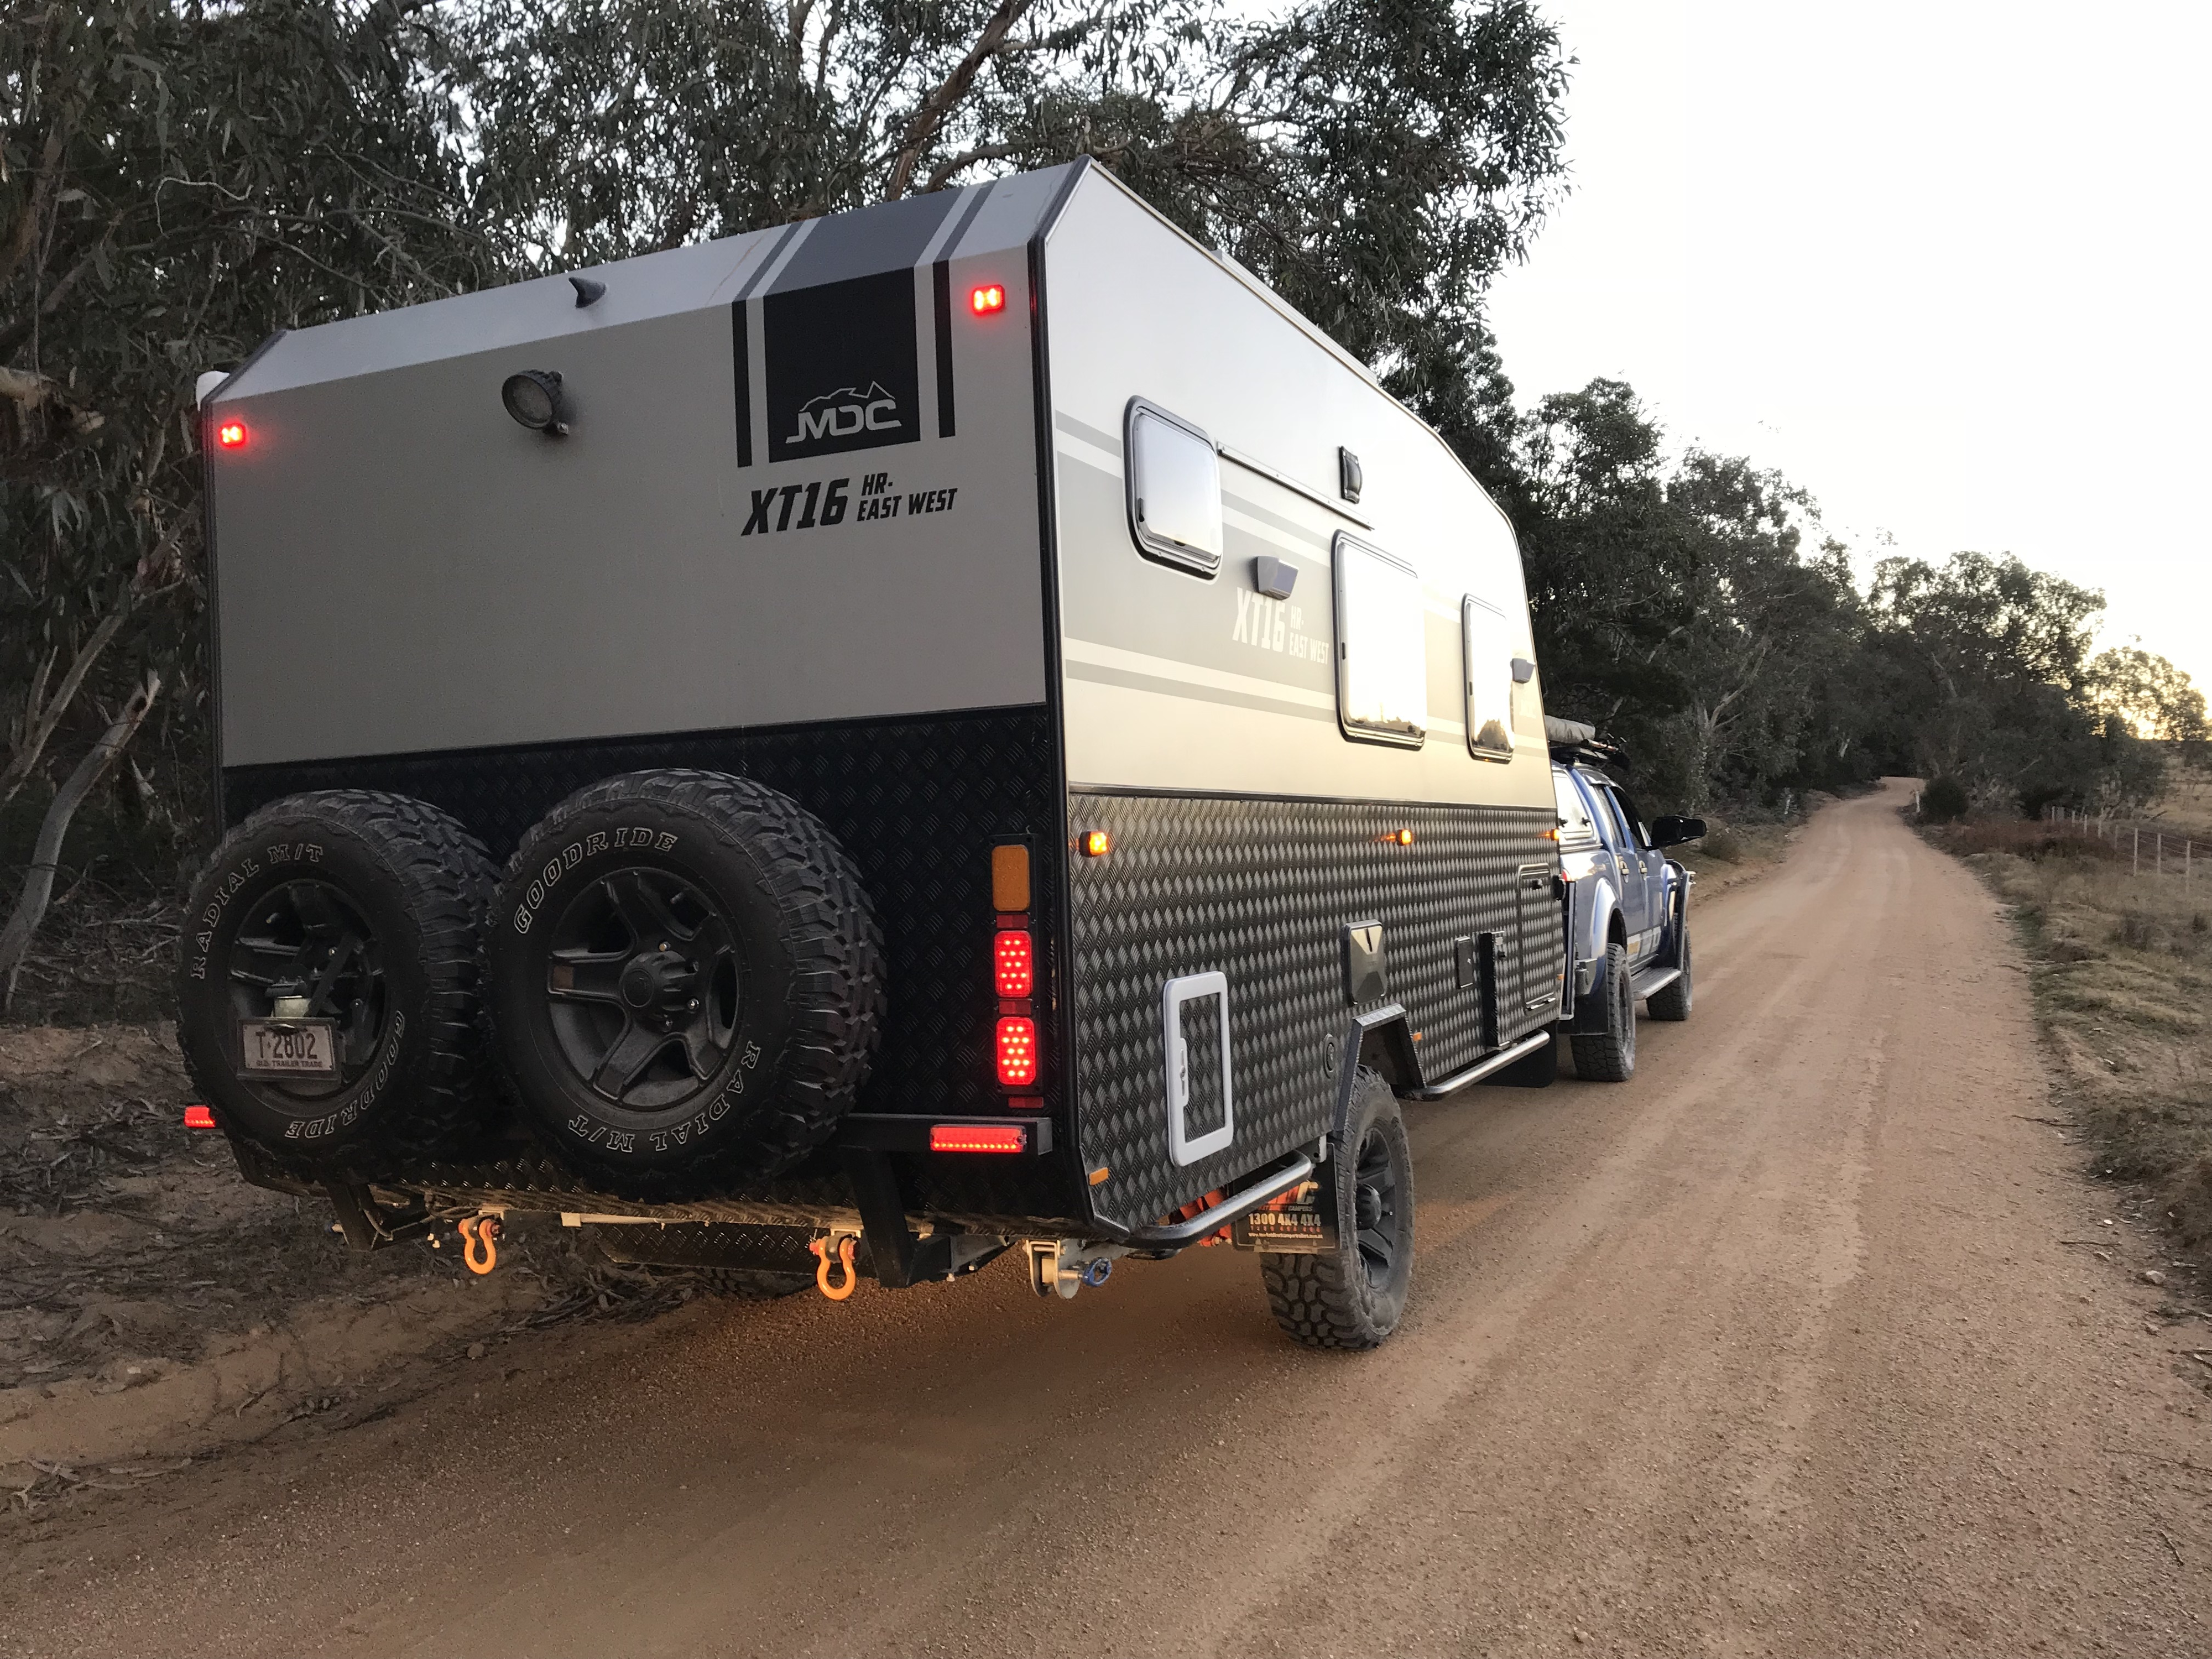 Road Trips Australia Episode 14